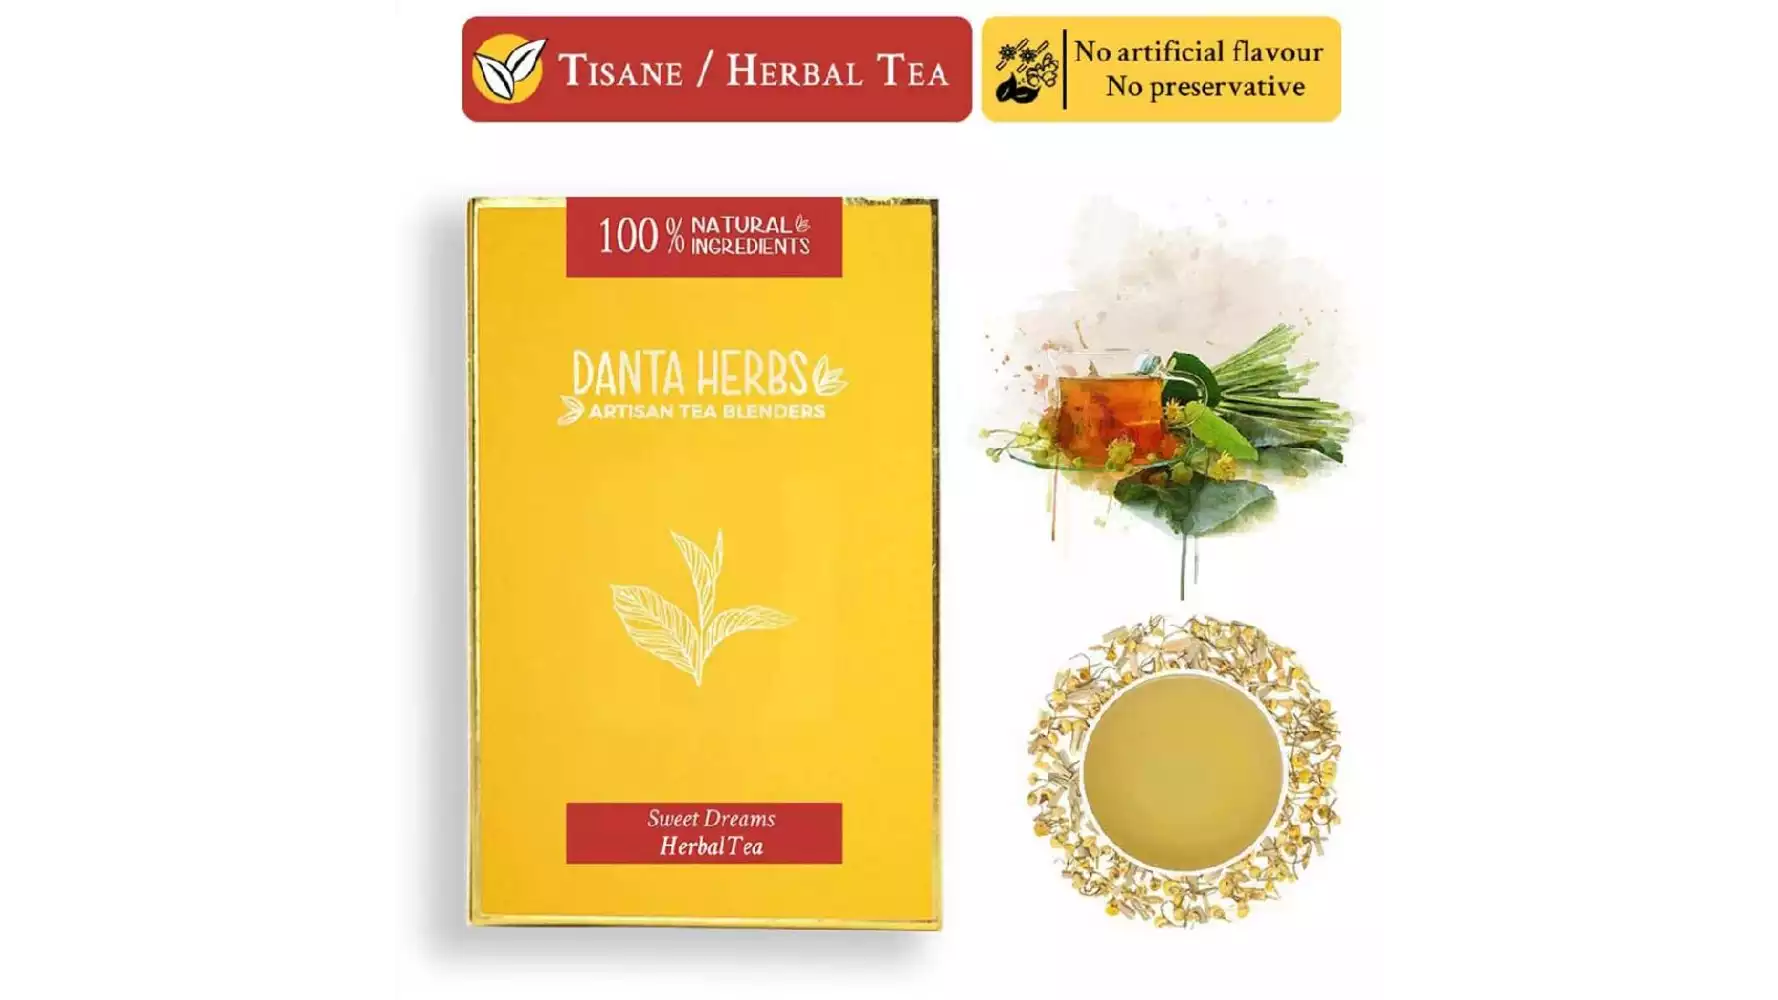 Danta Herbs Sweet Dreams Herbal Tea (100g)